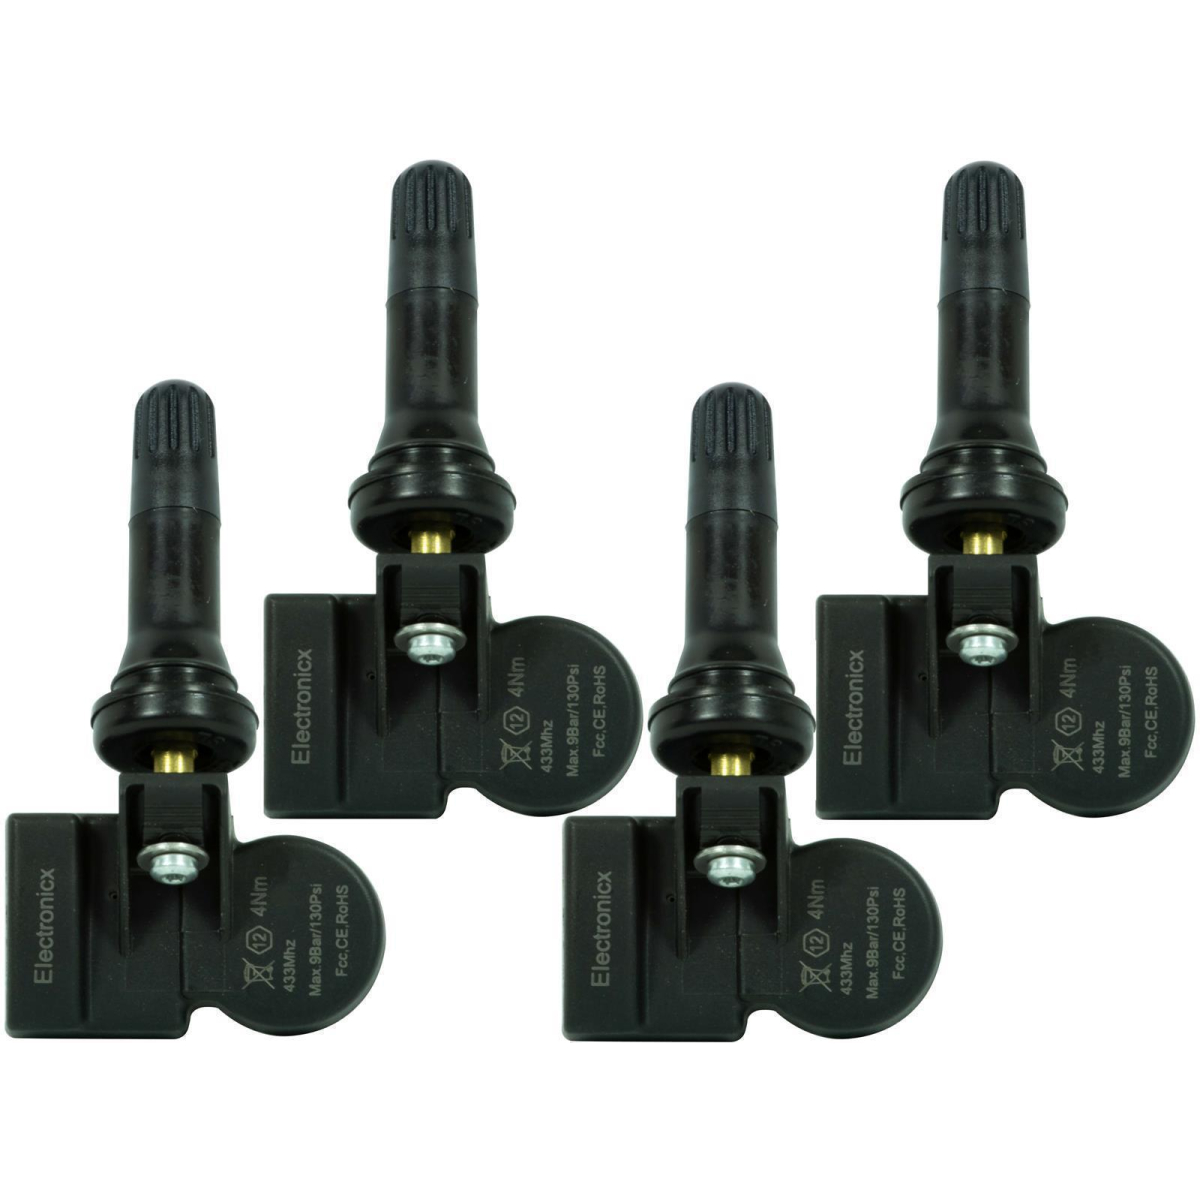 4x RDKS TPMS tire pressure sensors rubber valve for BAIC BJ80 S3L S5 S7 BISU T5